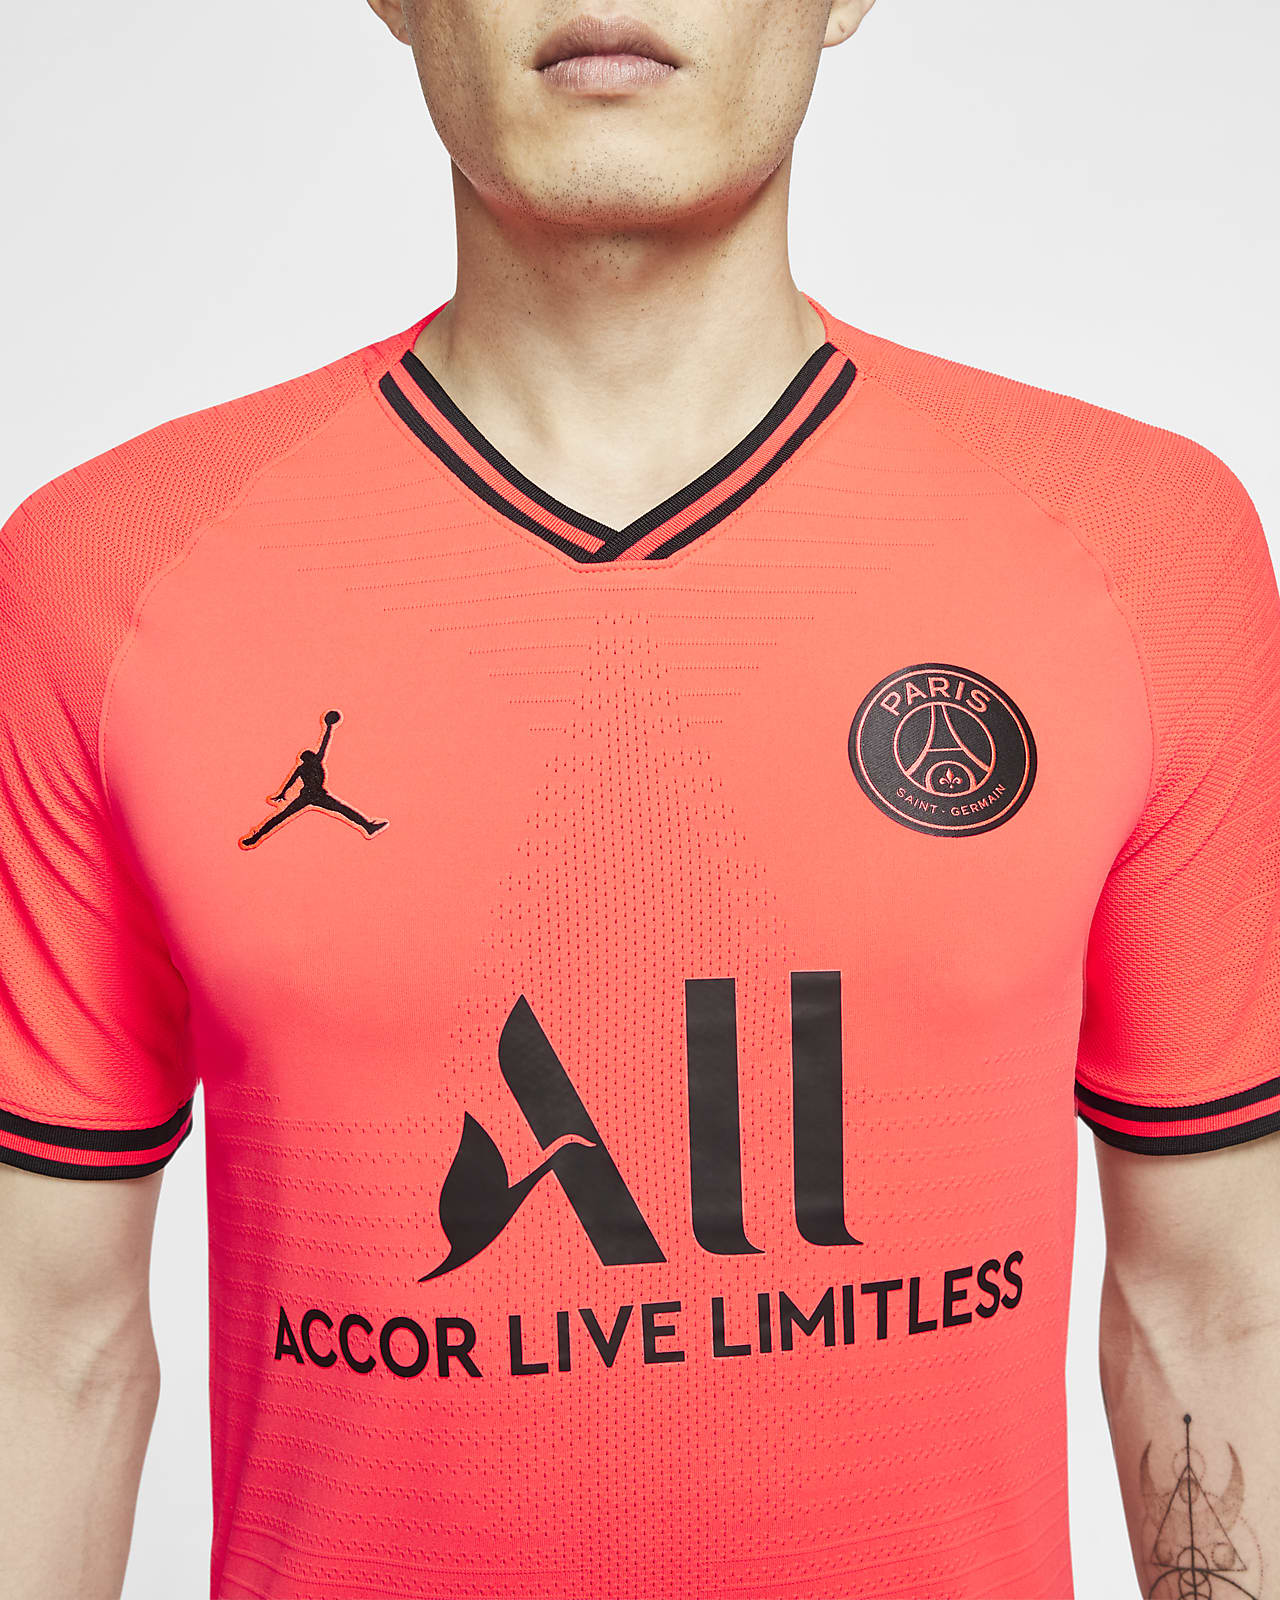 Paris Saint-Germain x Jordan Brand Infrared 2019/20 Away Kit